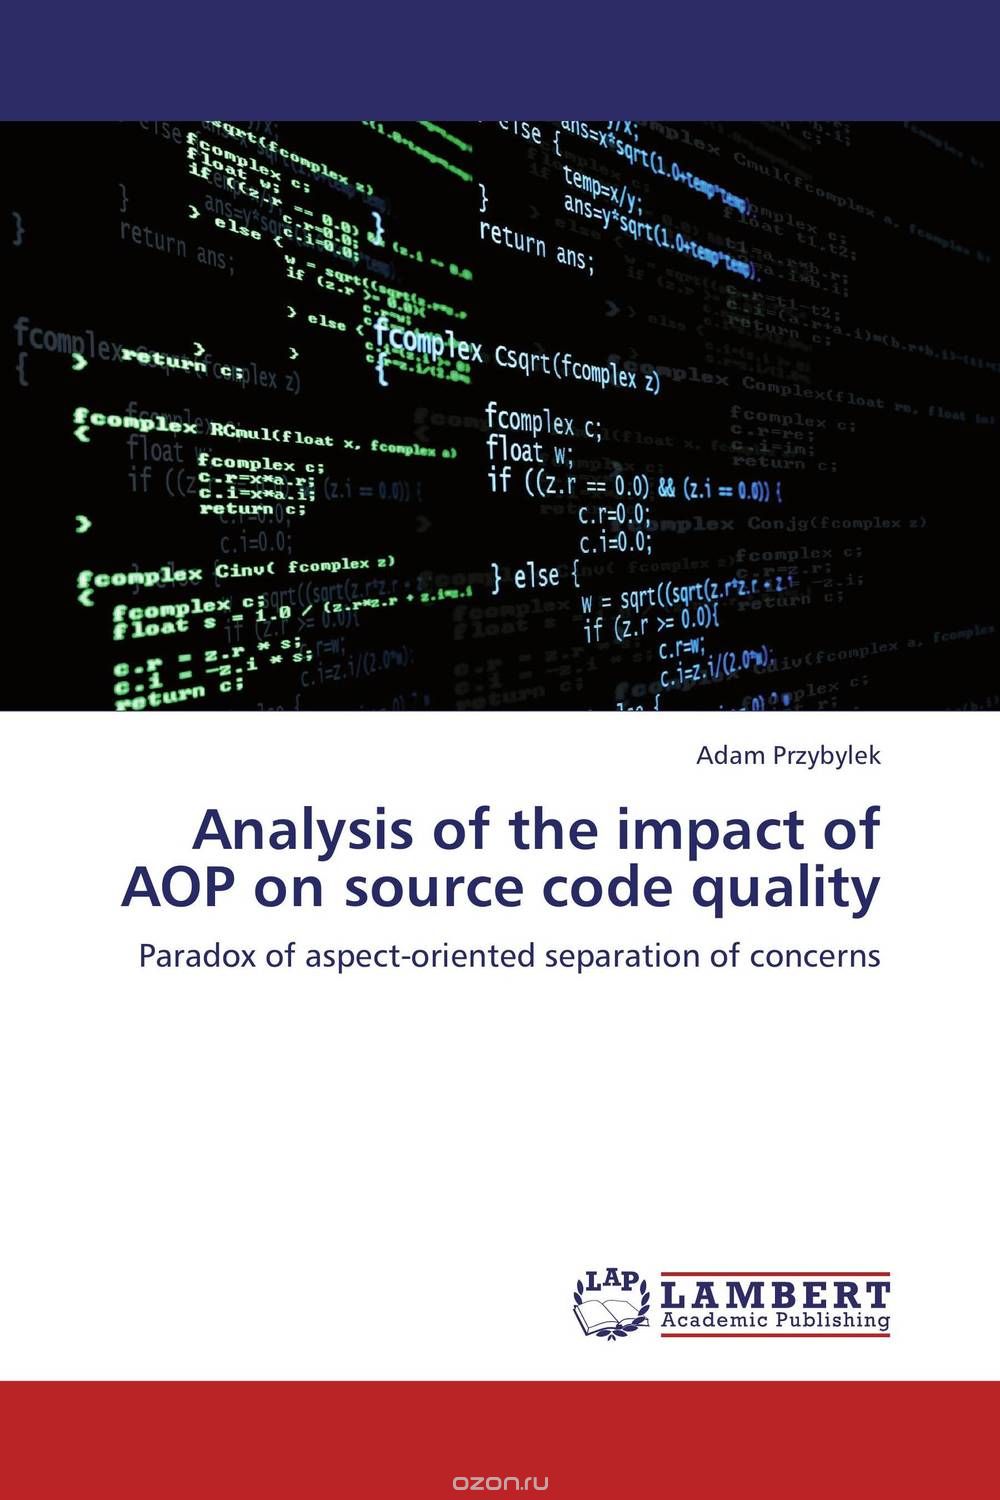 Скачать книгу "Analysis of the impact of AOP on source code quality"